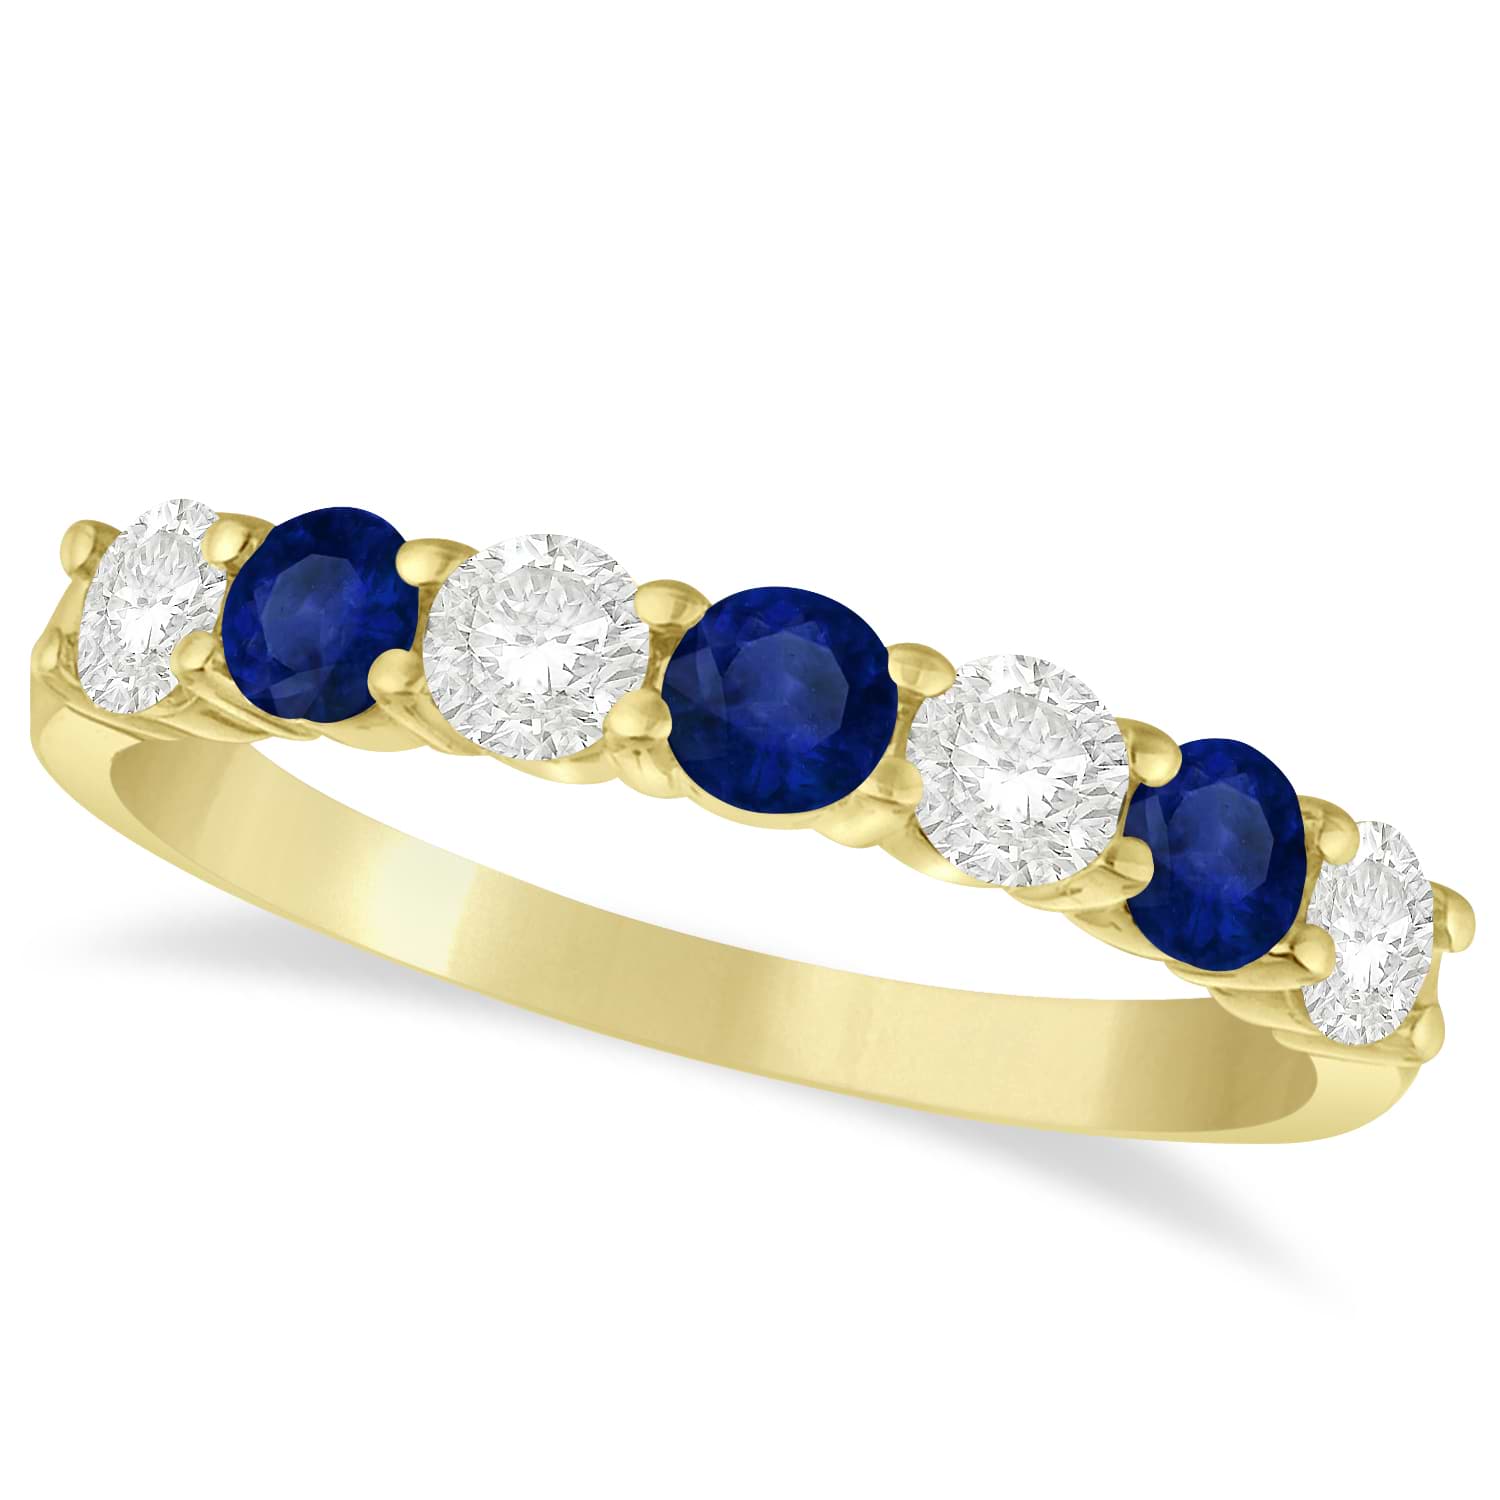 Diamond & Blue Sapphire 7 Stone Wedding Band 14k Yellow Gold (1.00ct)